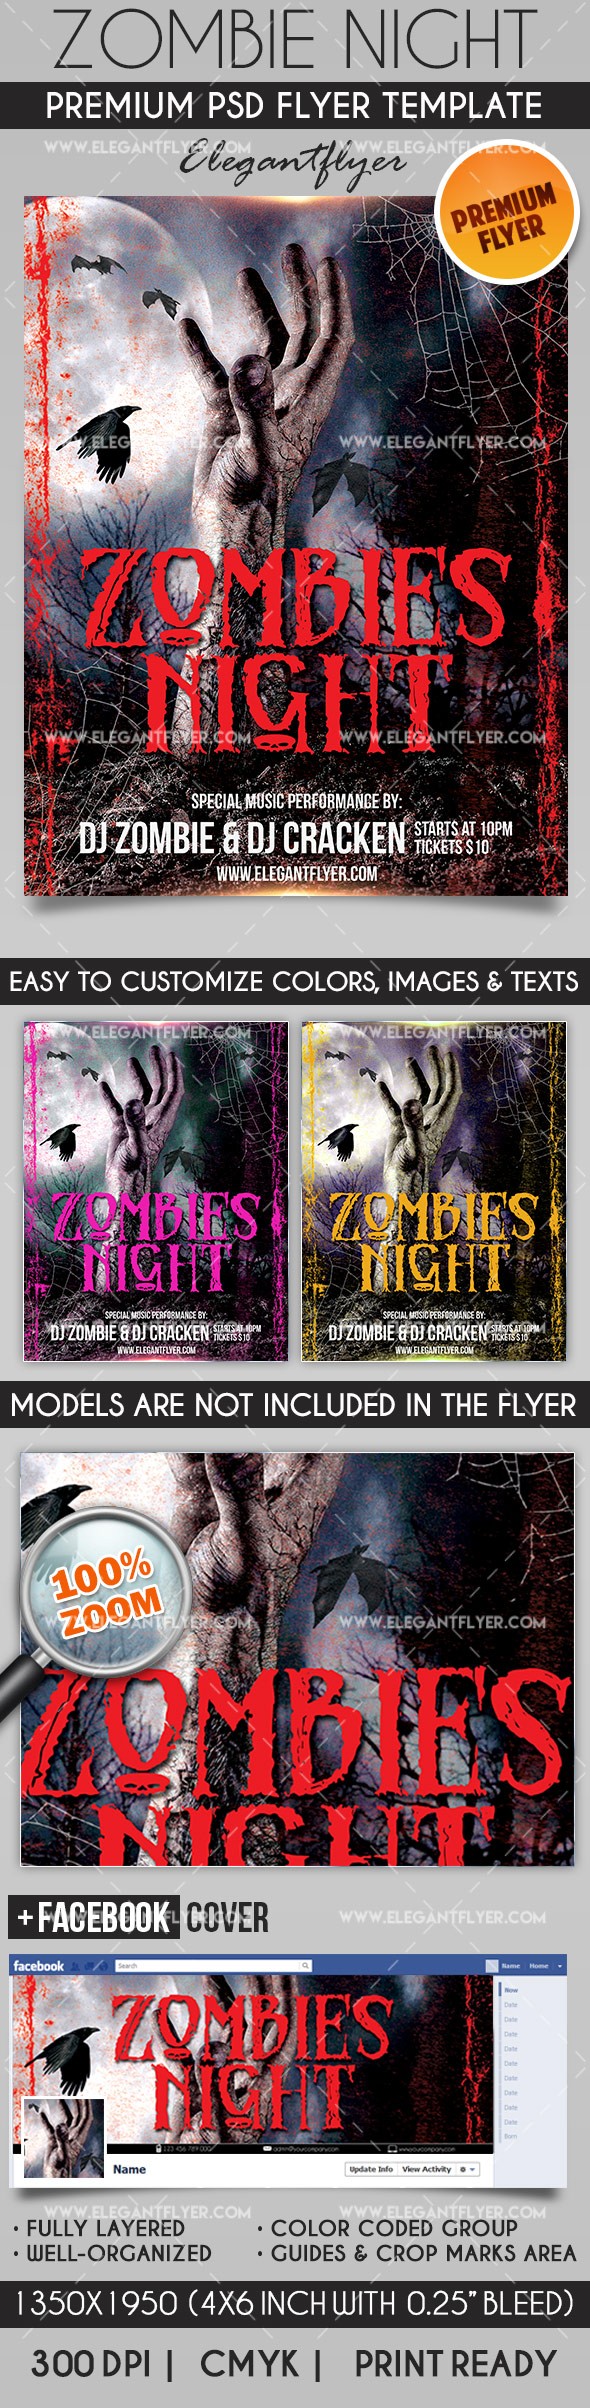 Notte degli zombie by ElegantFlyer